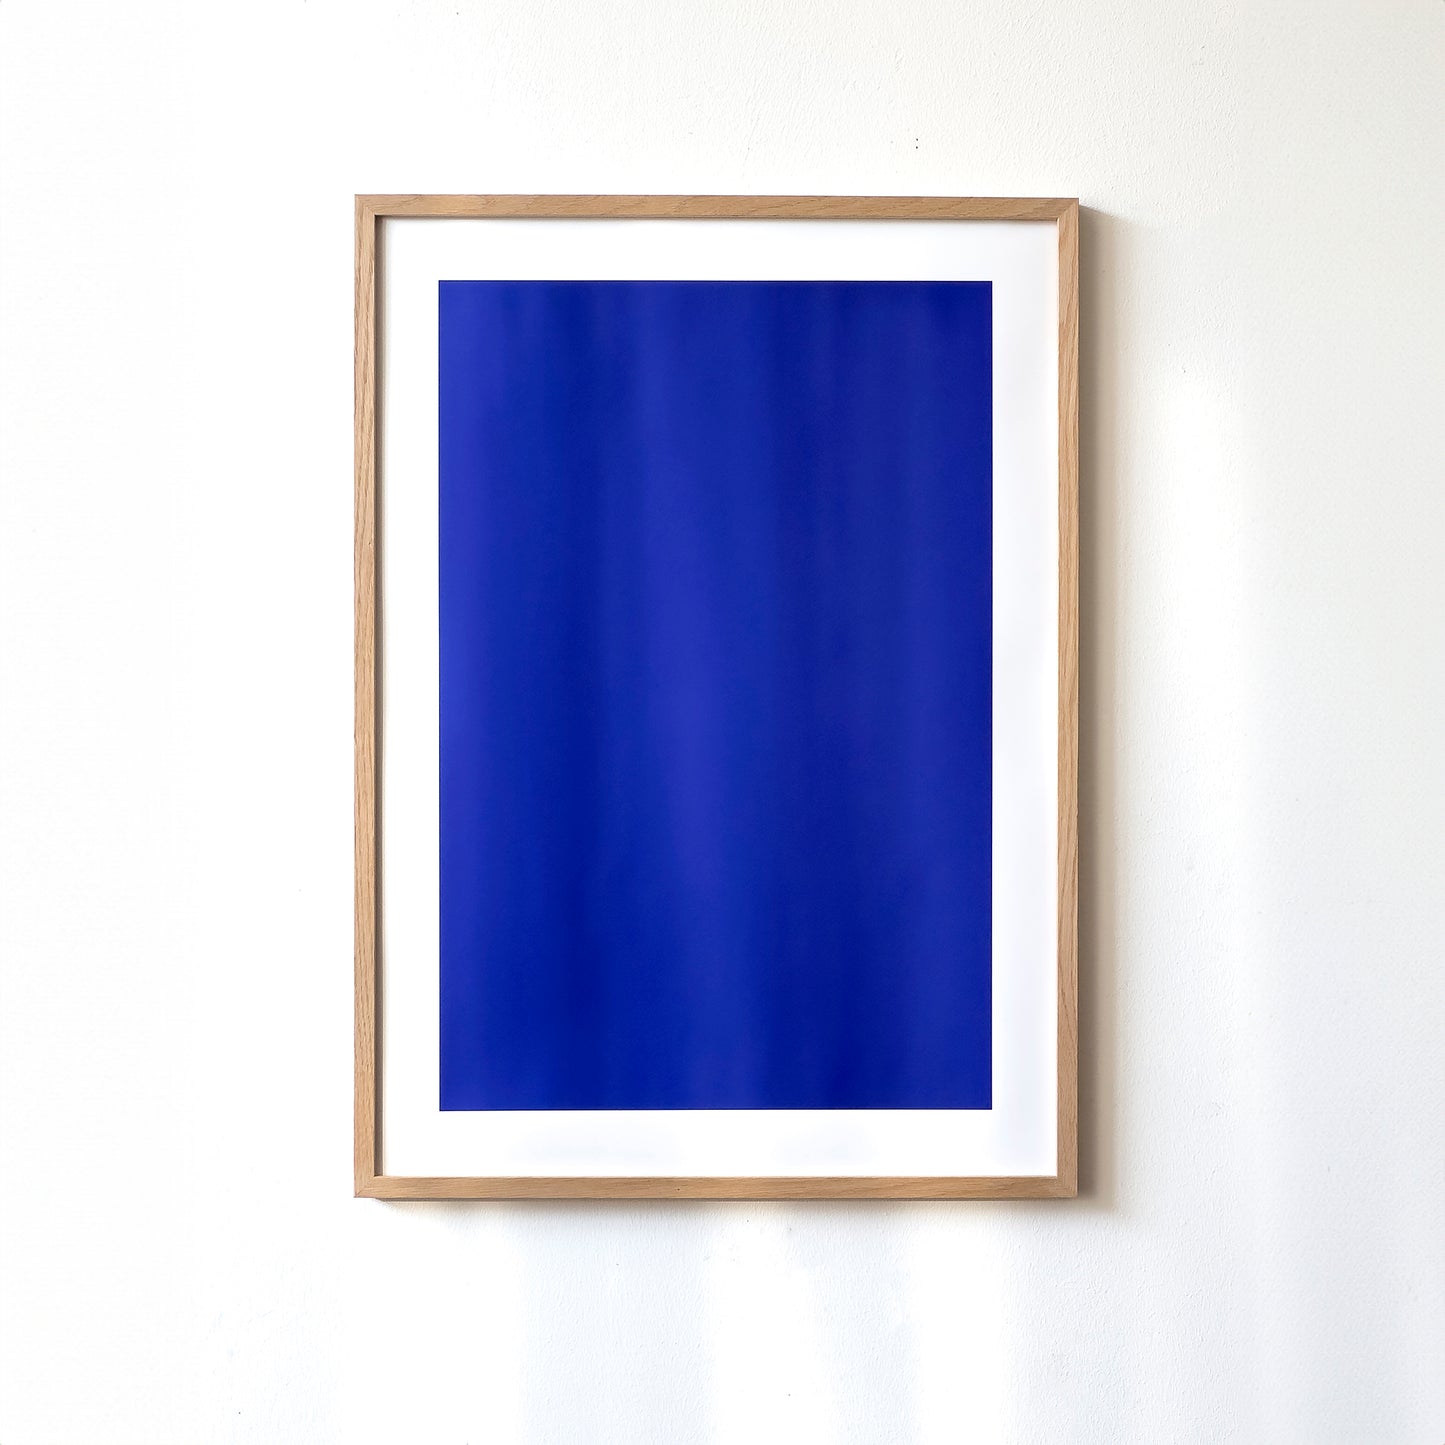 Kunstdruck im Bilderrahmen, Motiv blau monochrome Welle, Titel IKB II